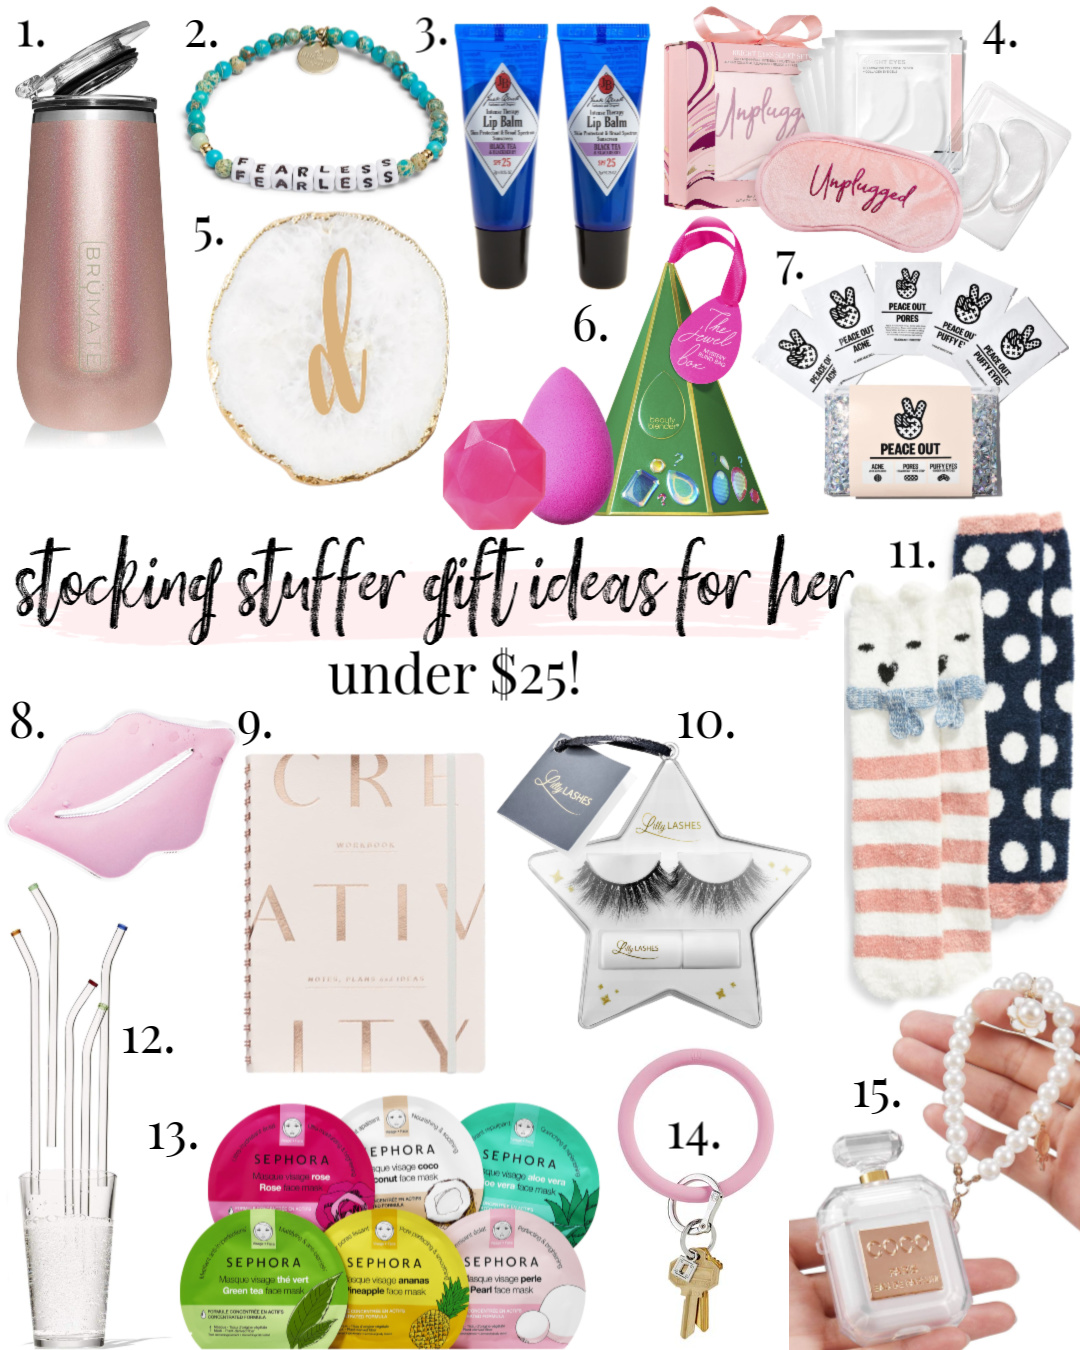 Stocking Stuffer Gift Ideas for her under $25, Gift Guide for women under $25, affordable stocking stuffers for her, cute stocking stuffers